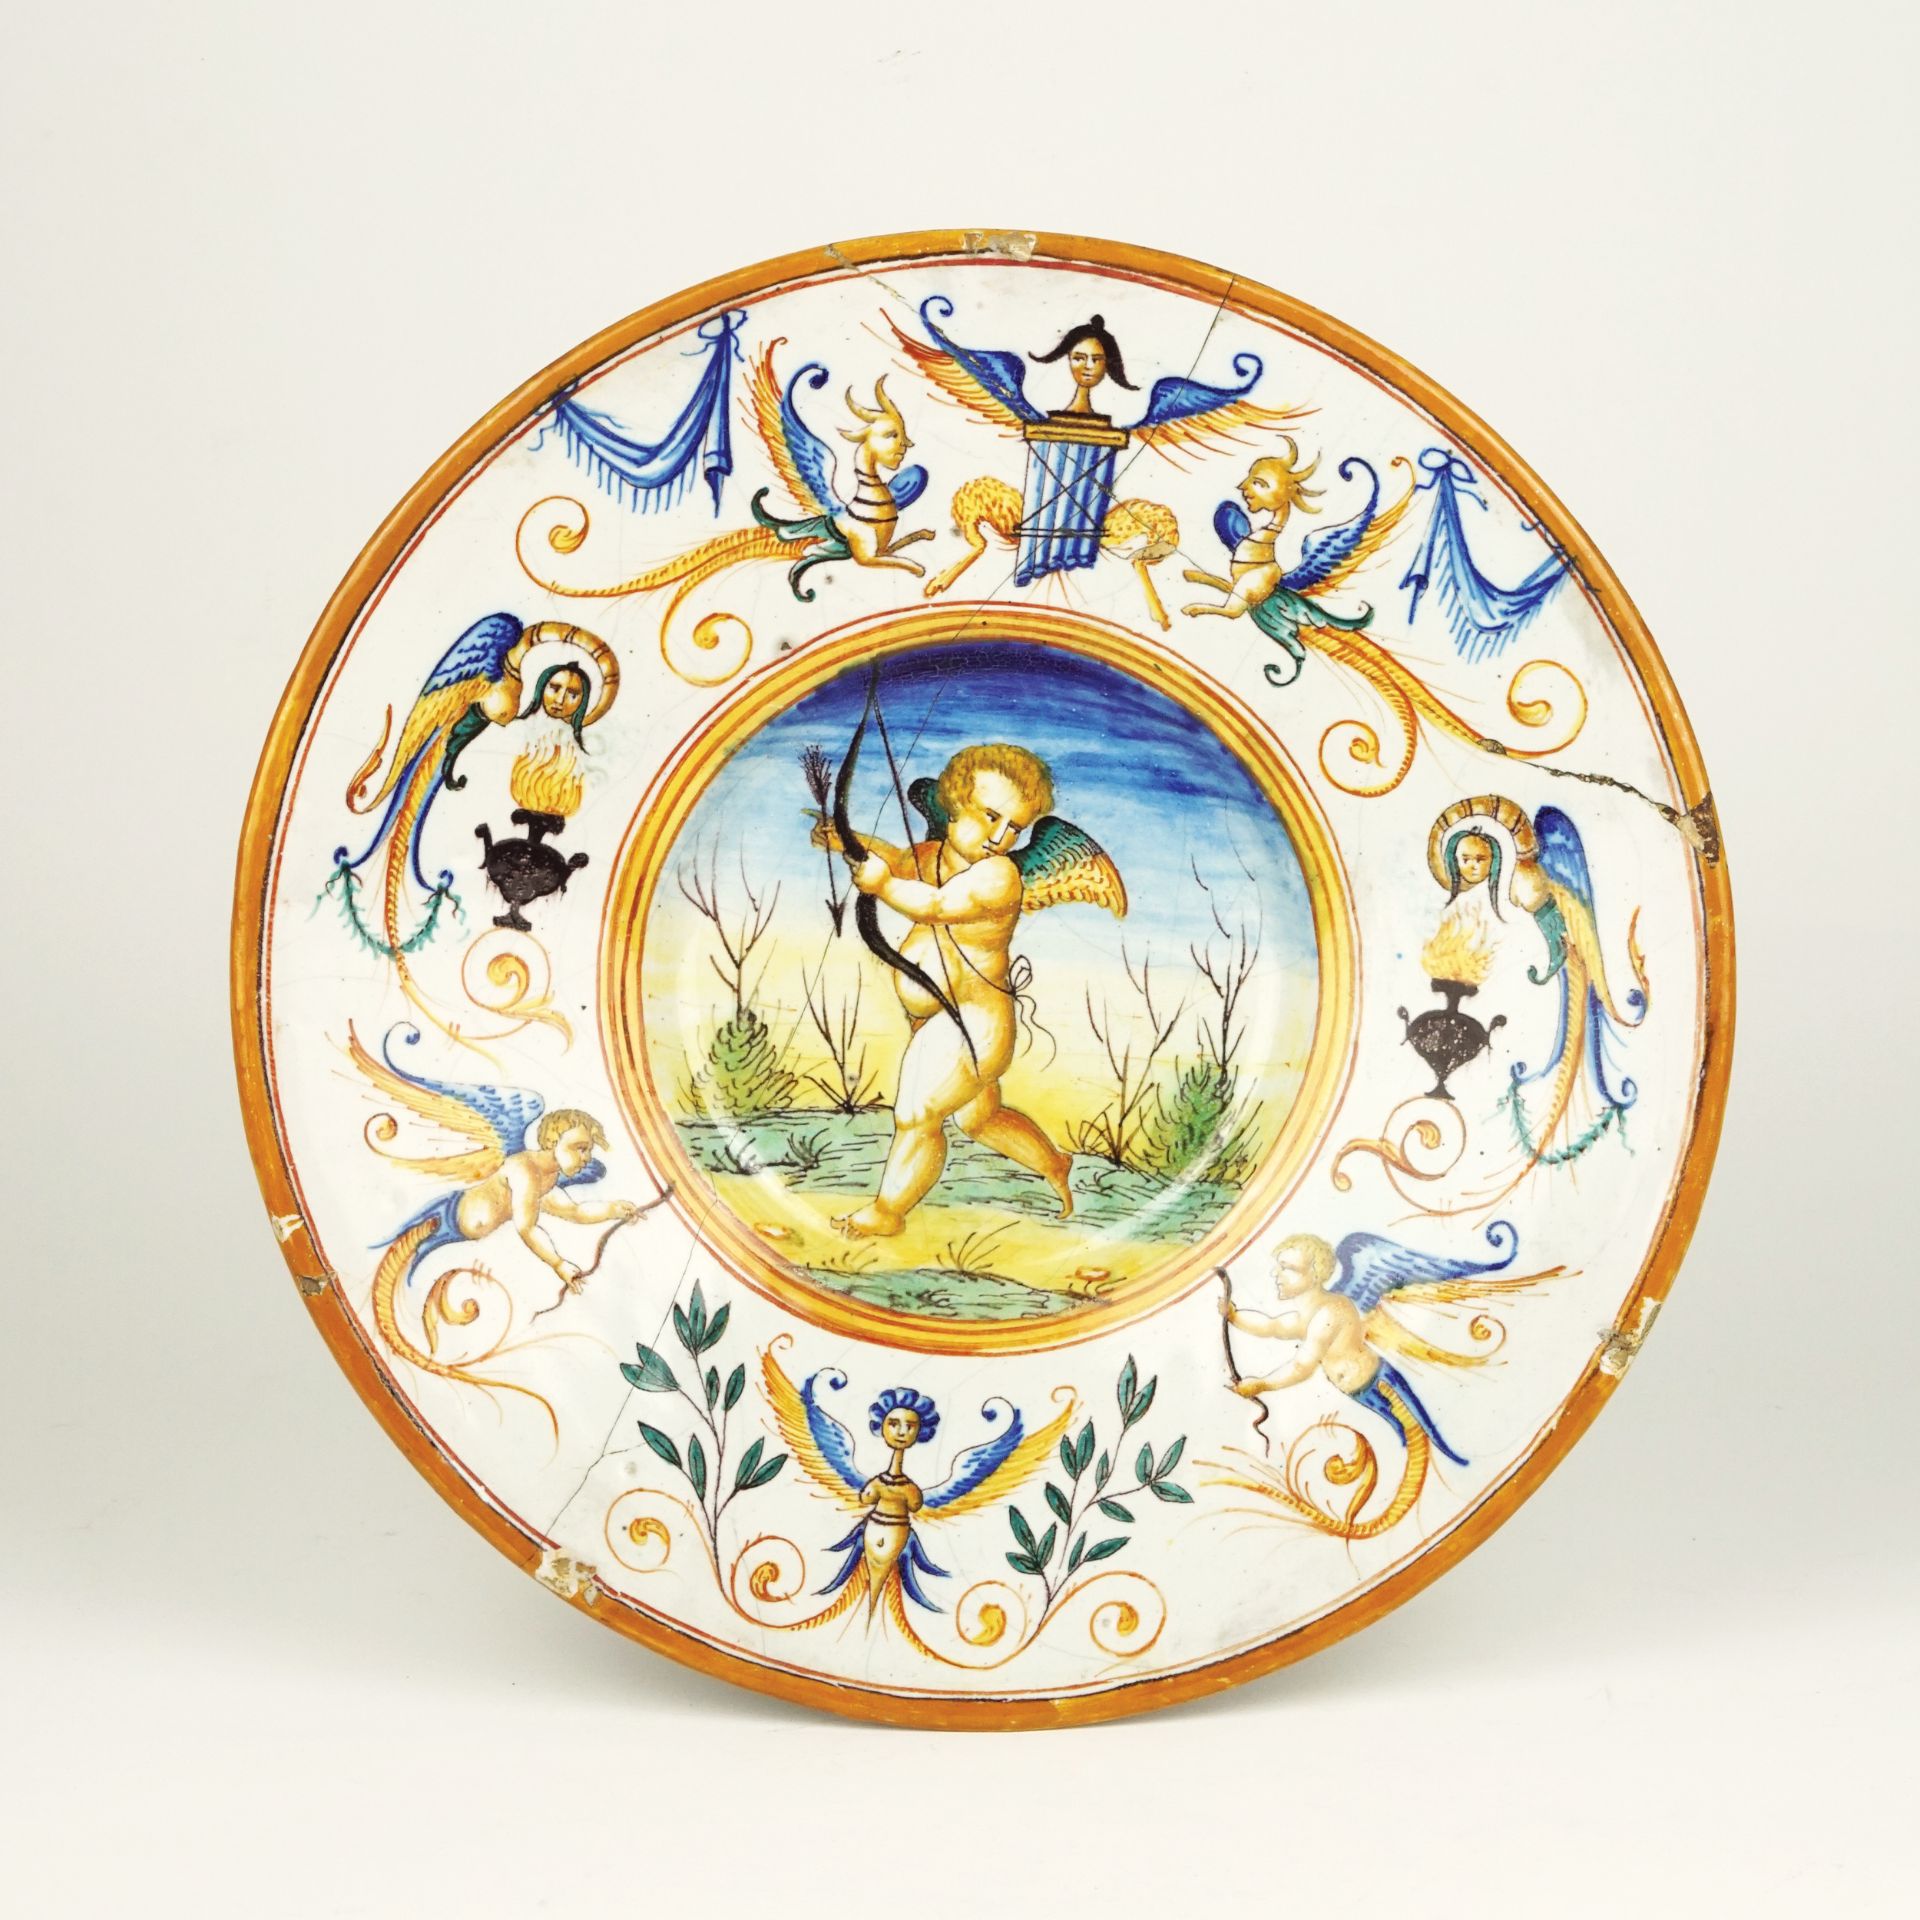 An IOtalian white and polychrome maiolica plate, Pesaro, late 19th century